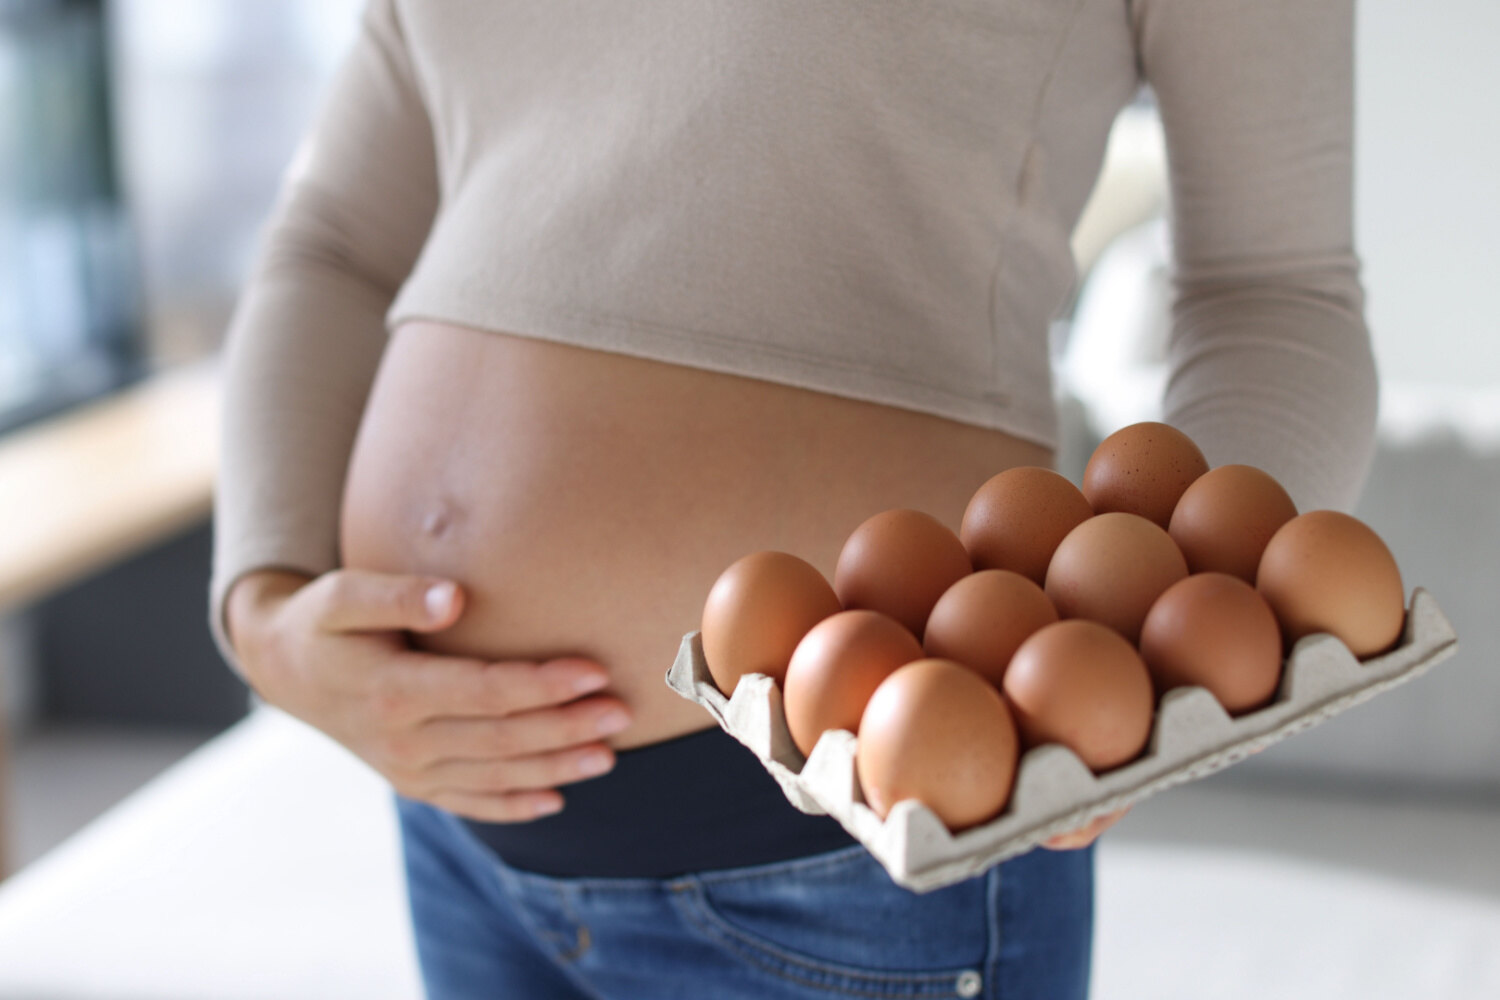 Benefits of egg during pregnancy